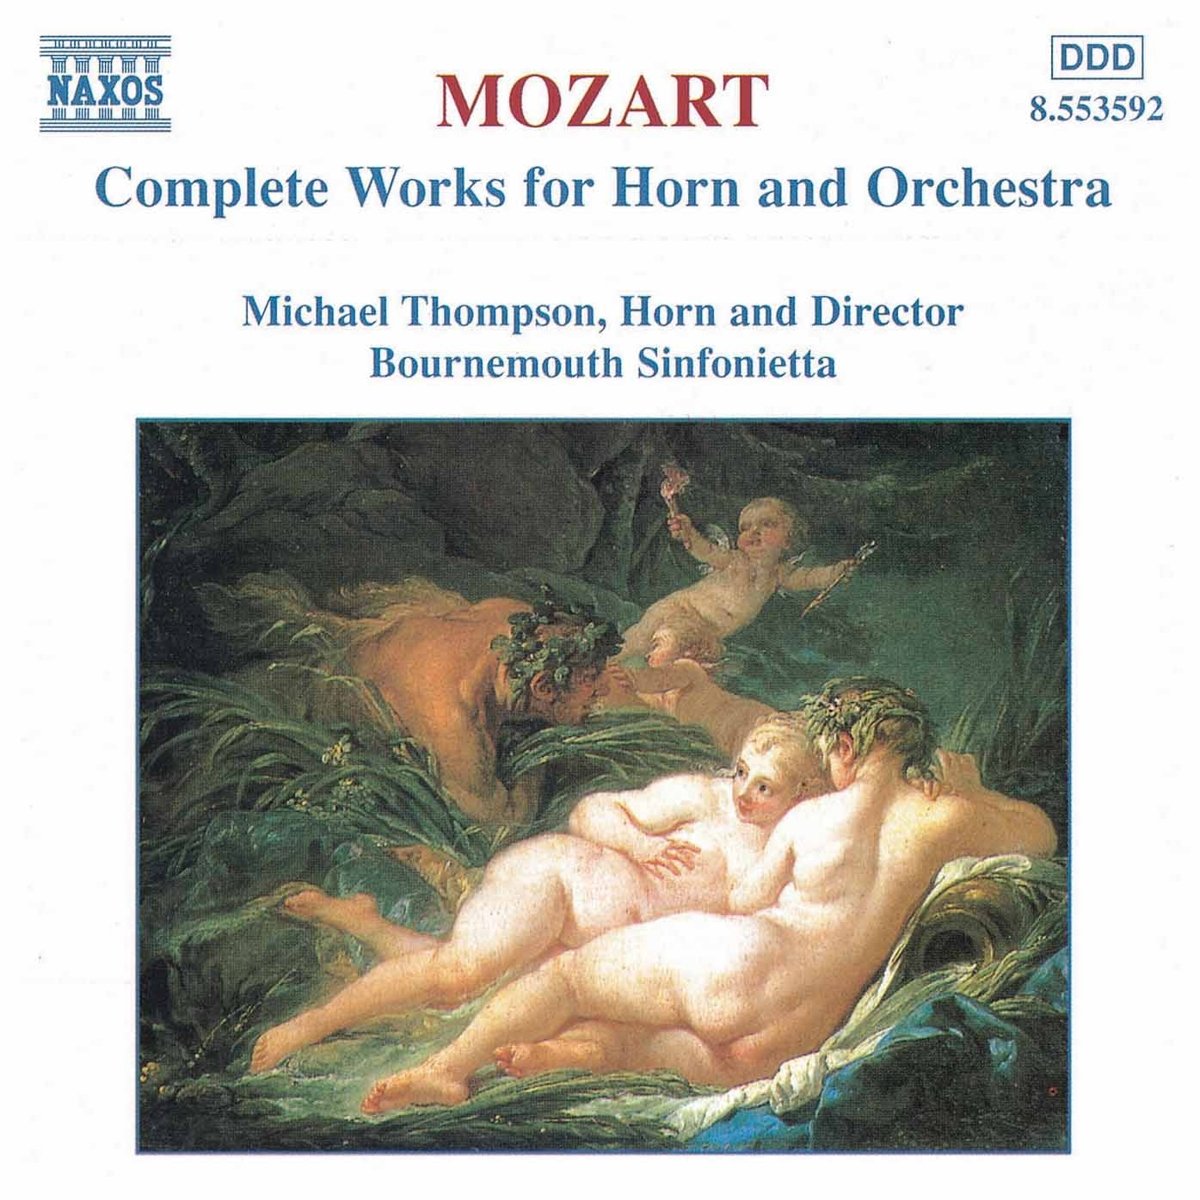 MOZART: Complete Works for Horn